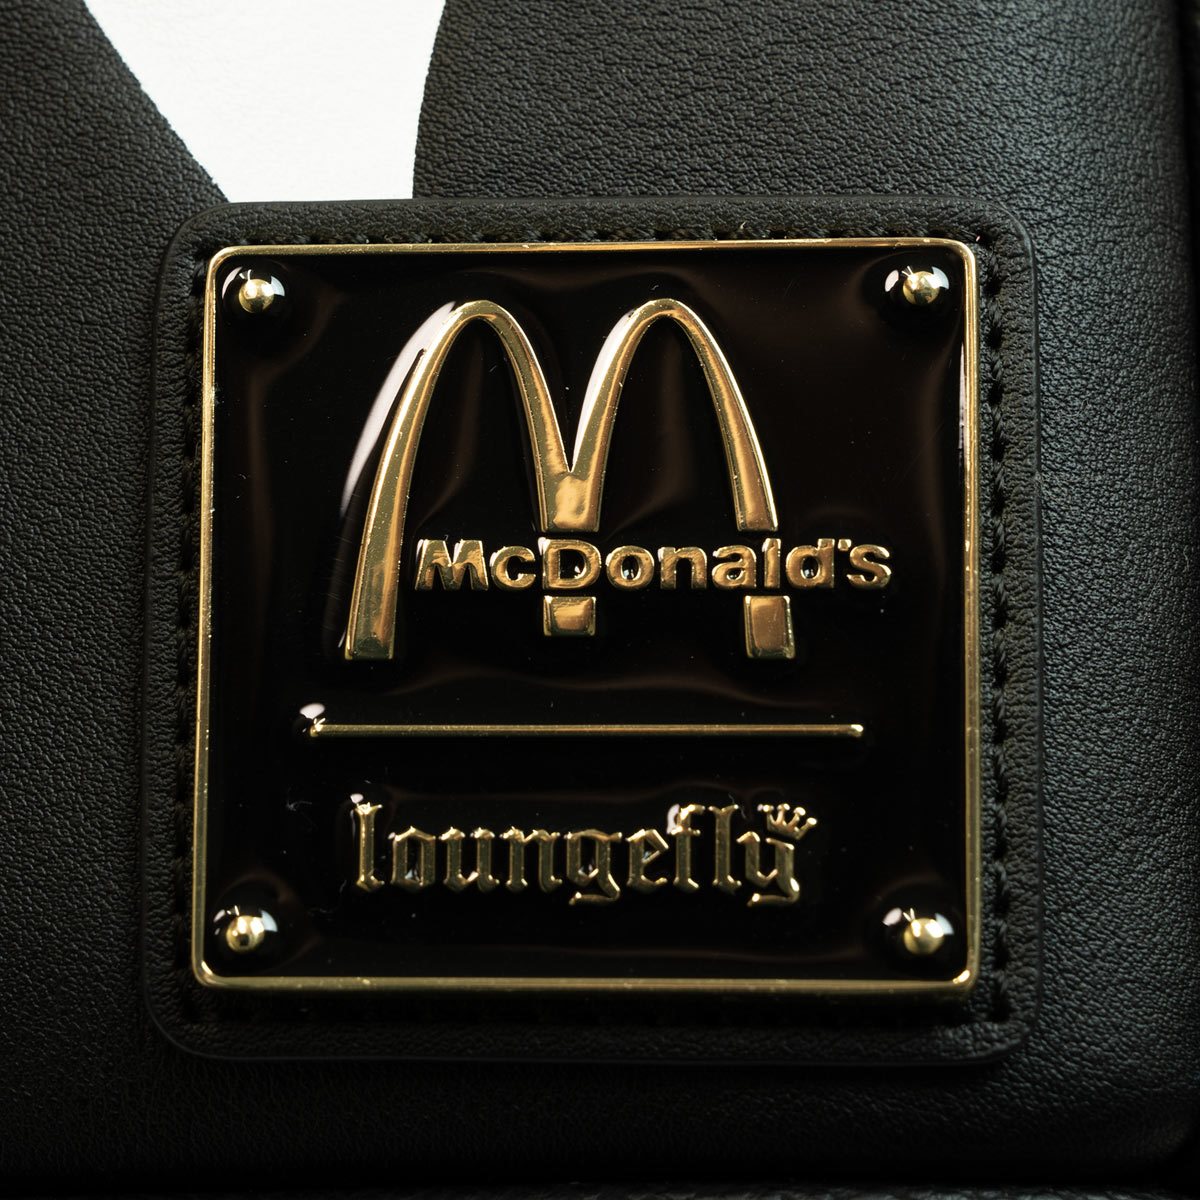 Loungfly McDonalds Backpacks